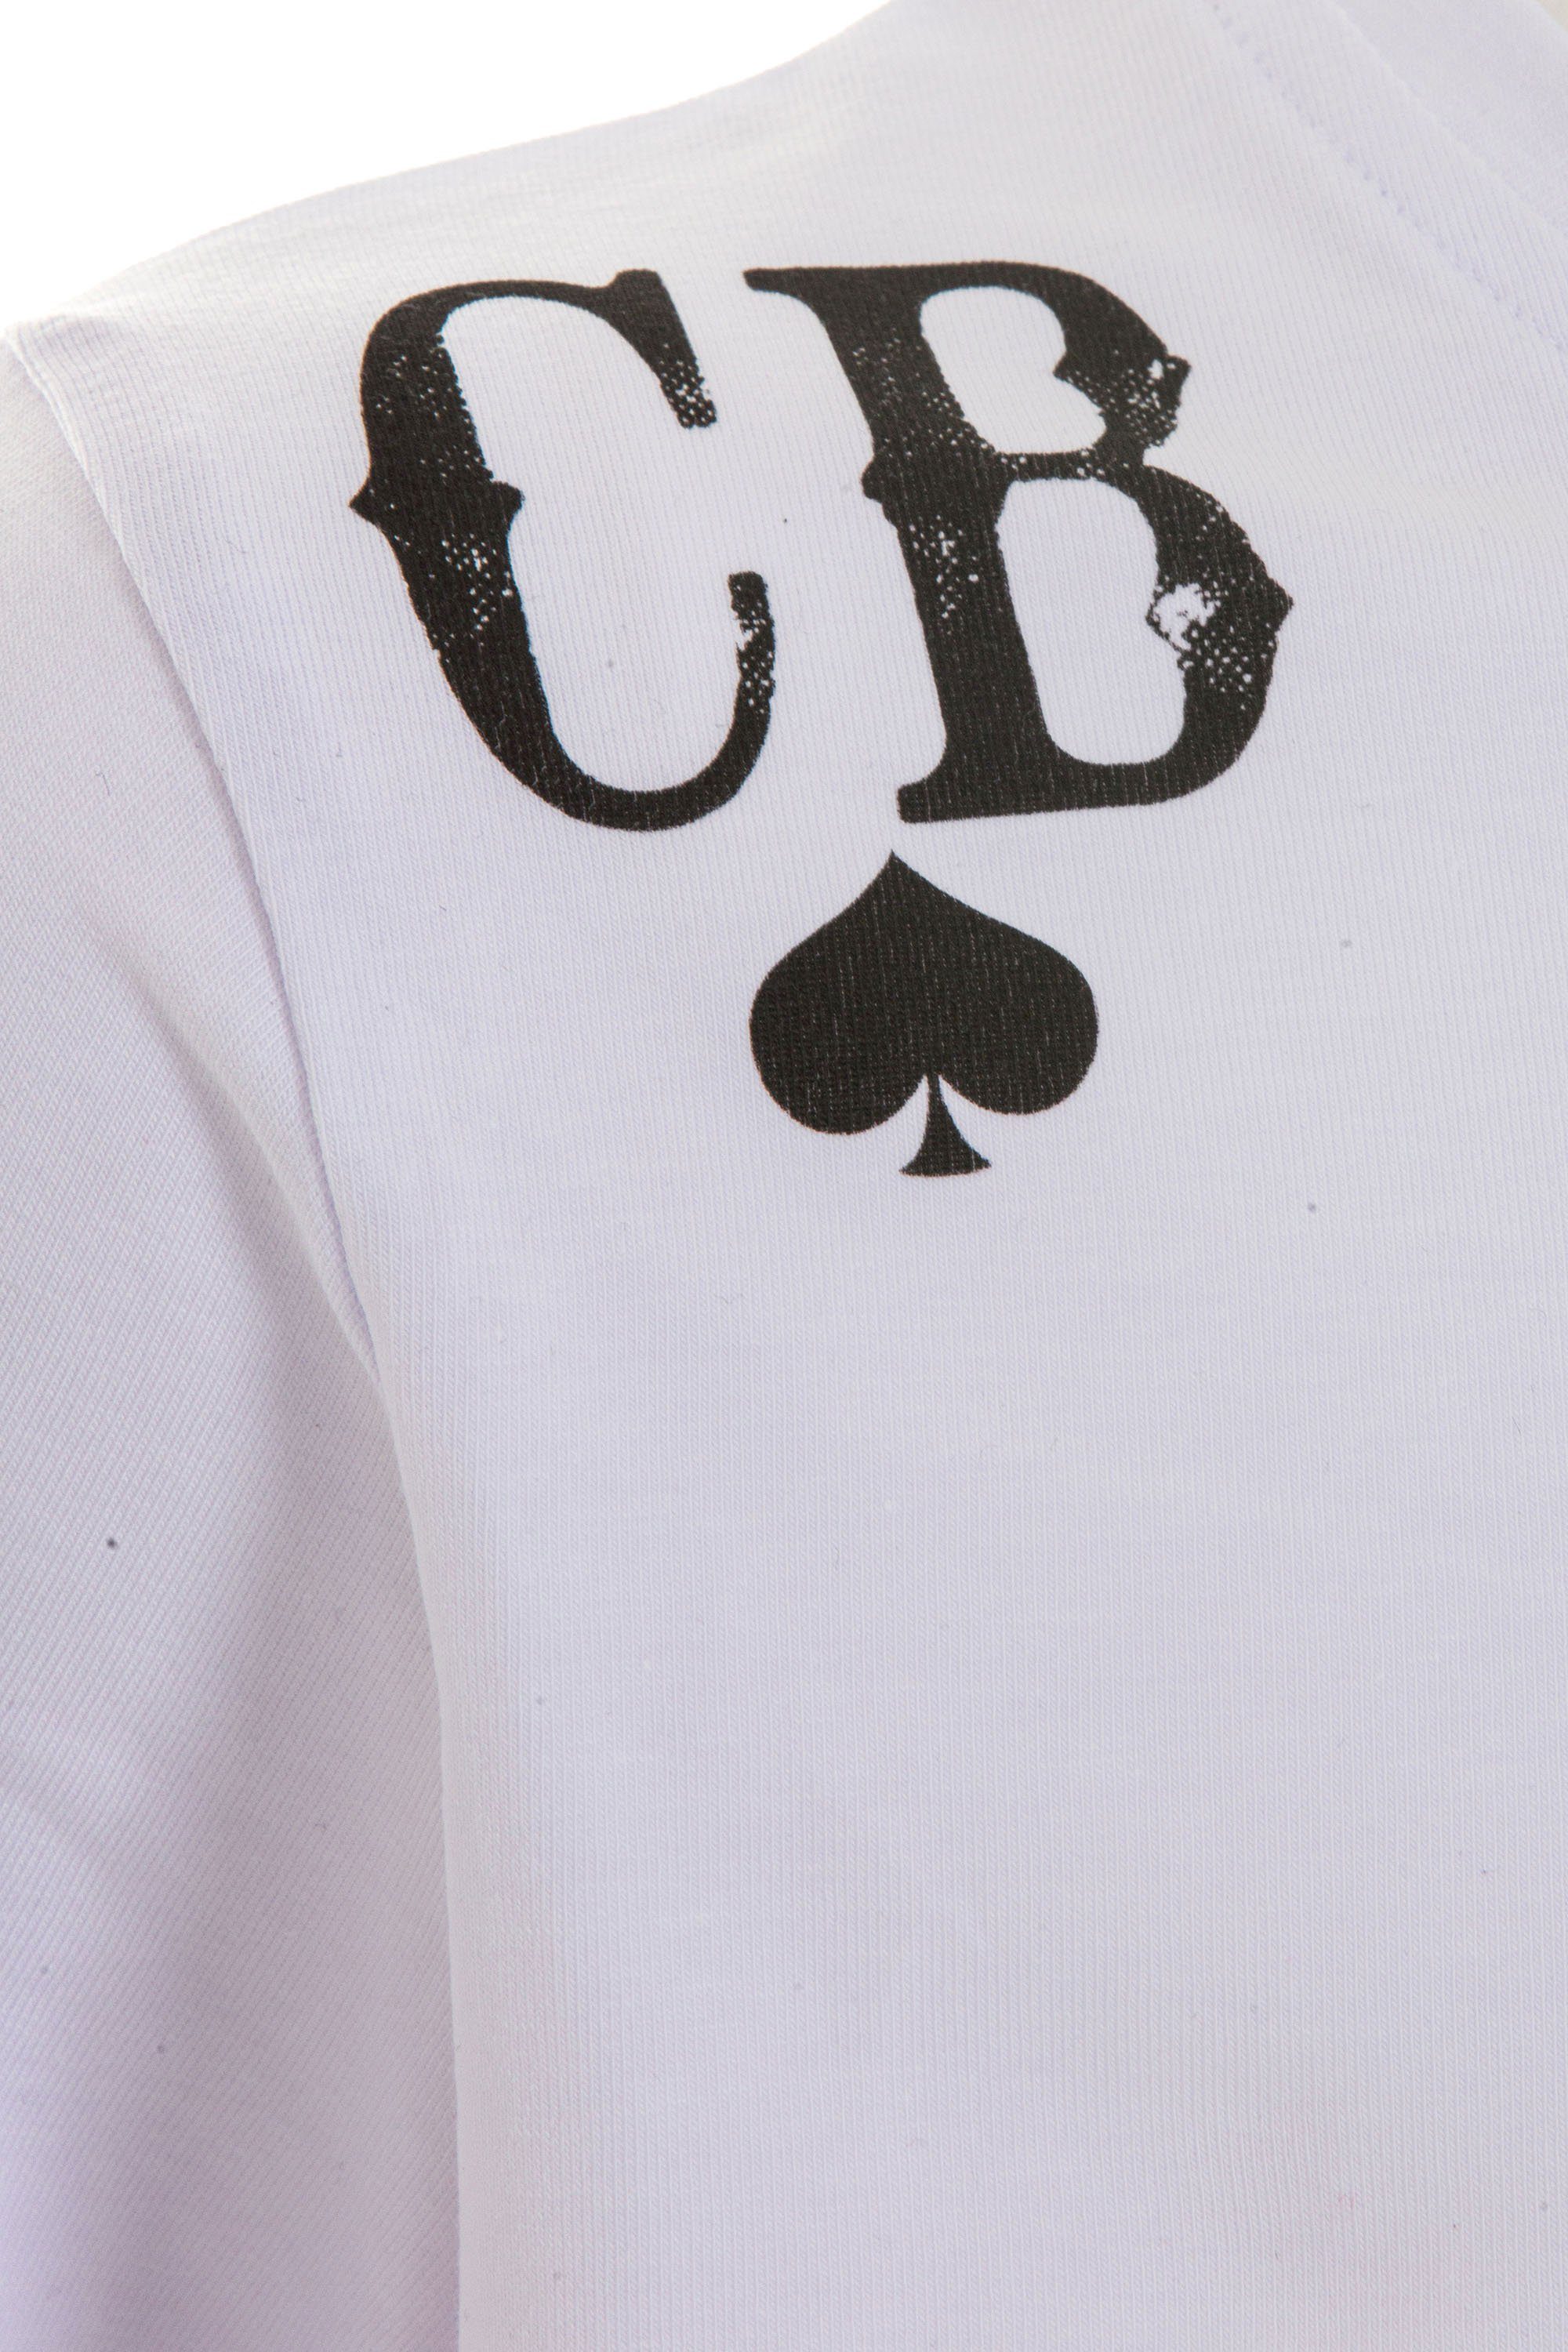 Cipo & Baxx weiß-schwarz T-Shirt mit Print coolem